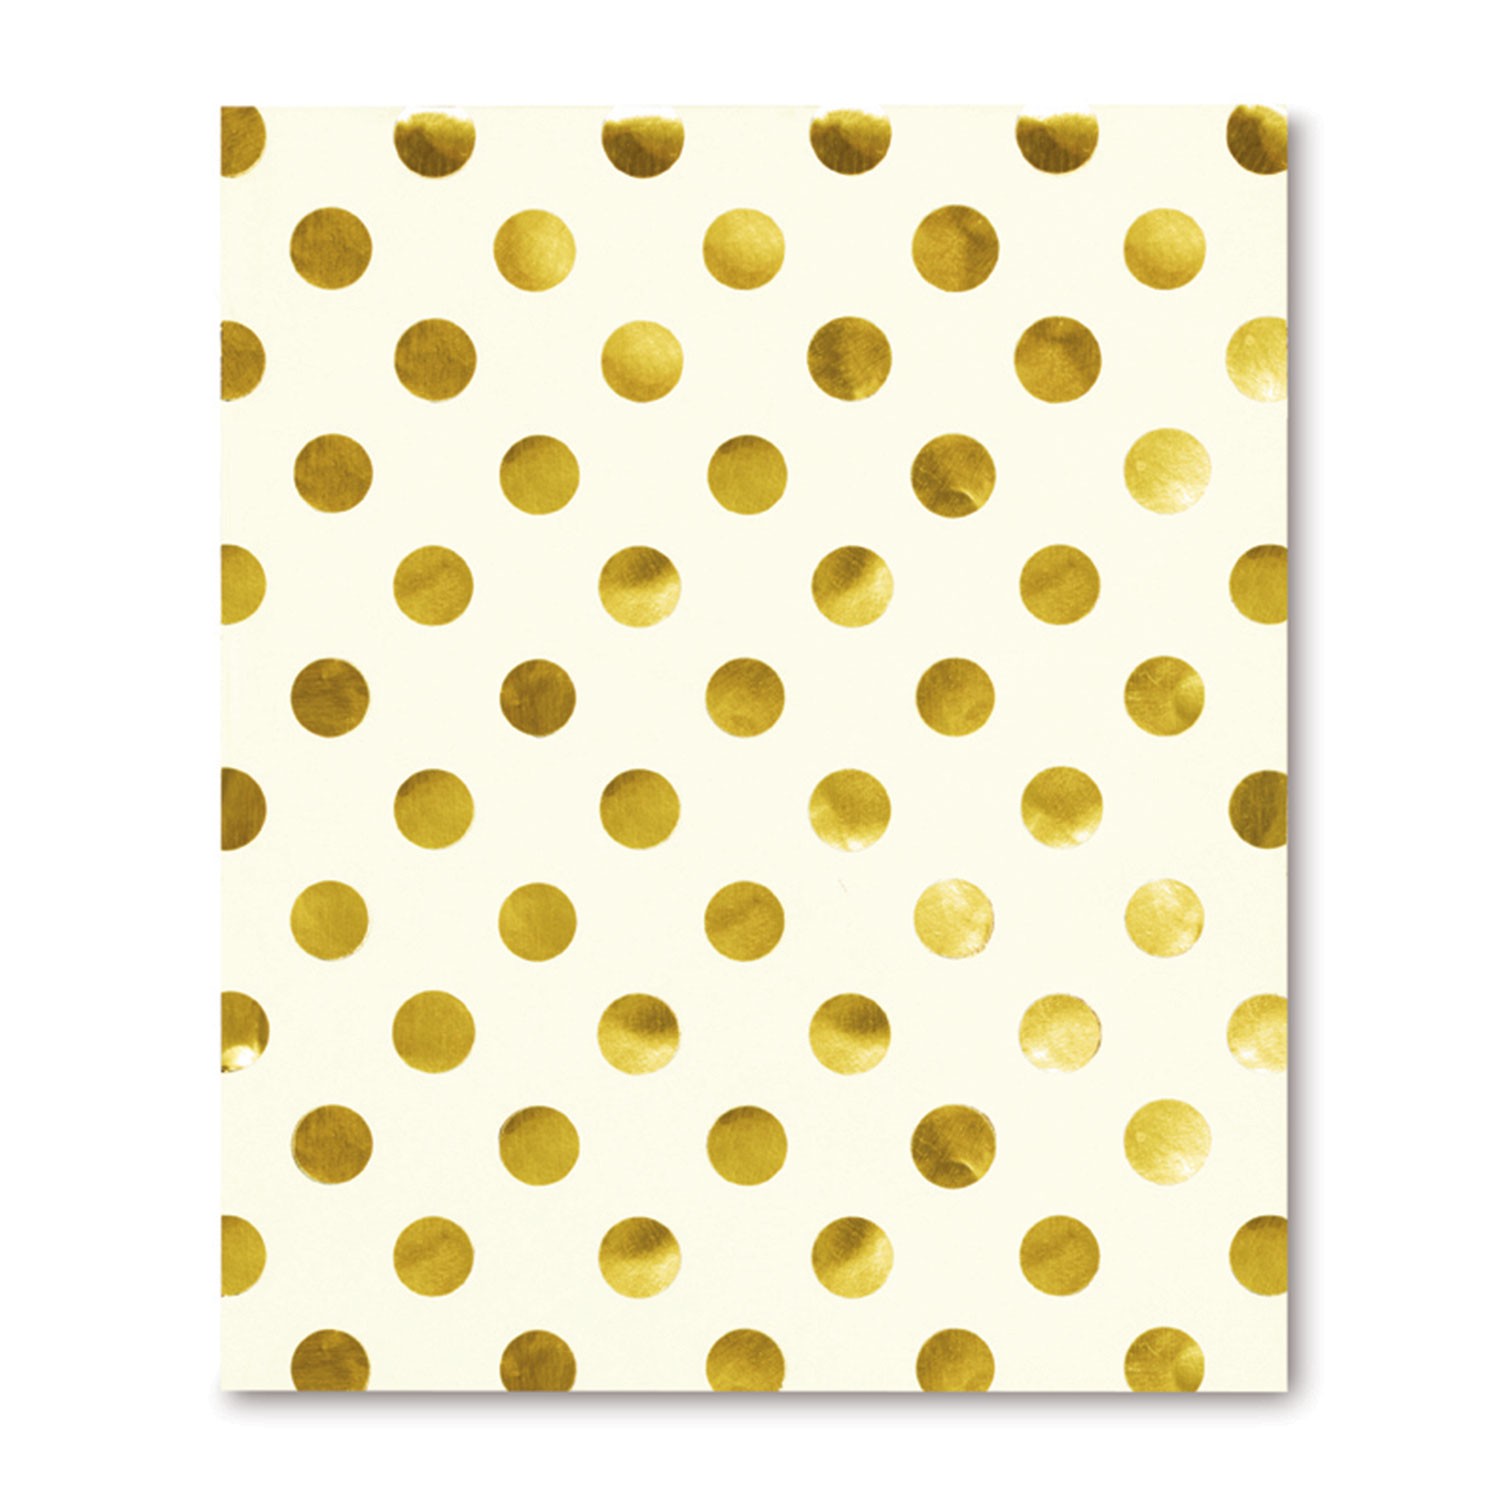 [49+] Gold Polka Dot Desktop Wallpaper on WallpaperSafari